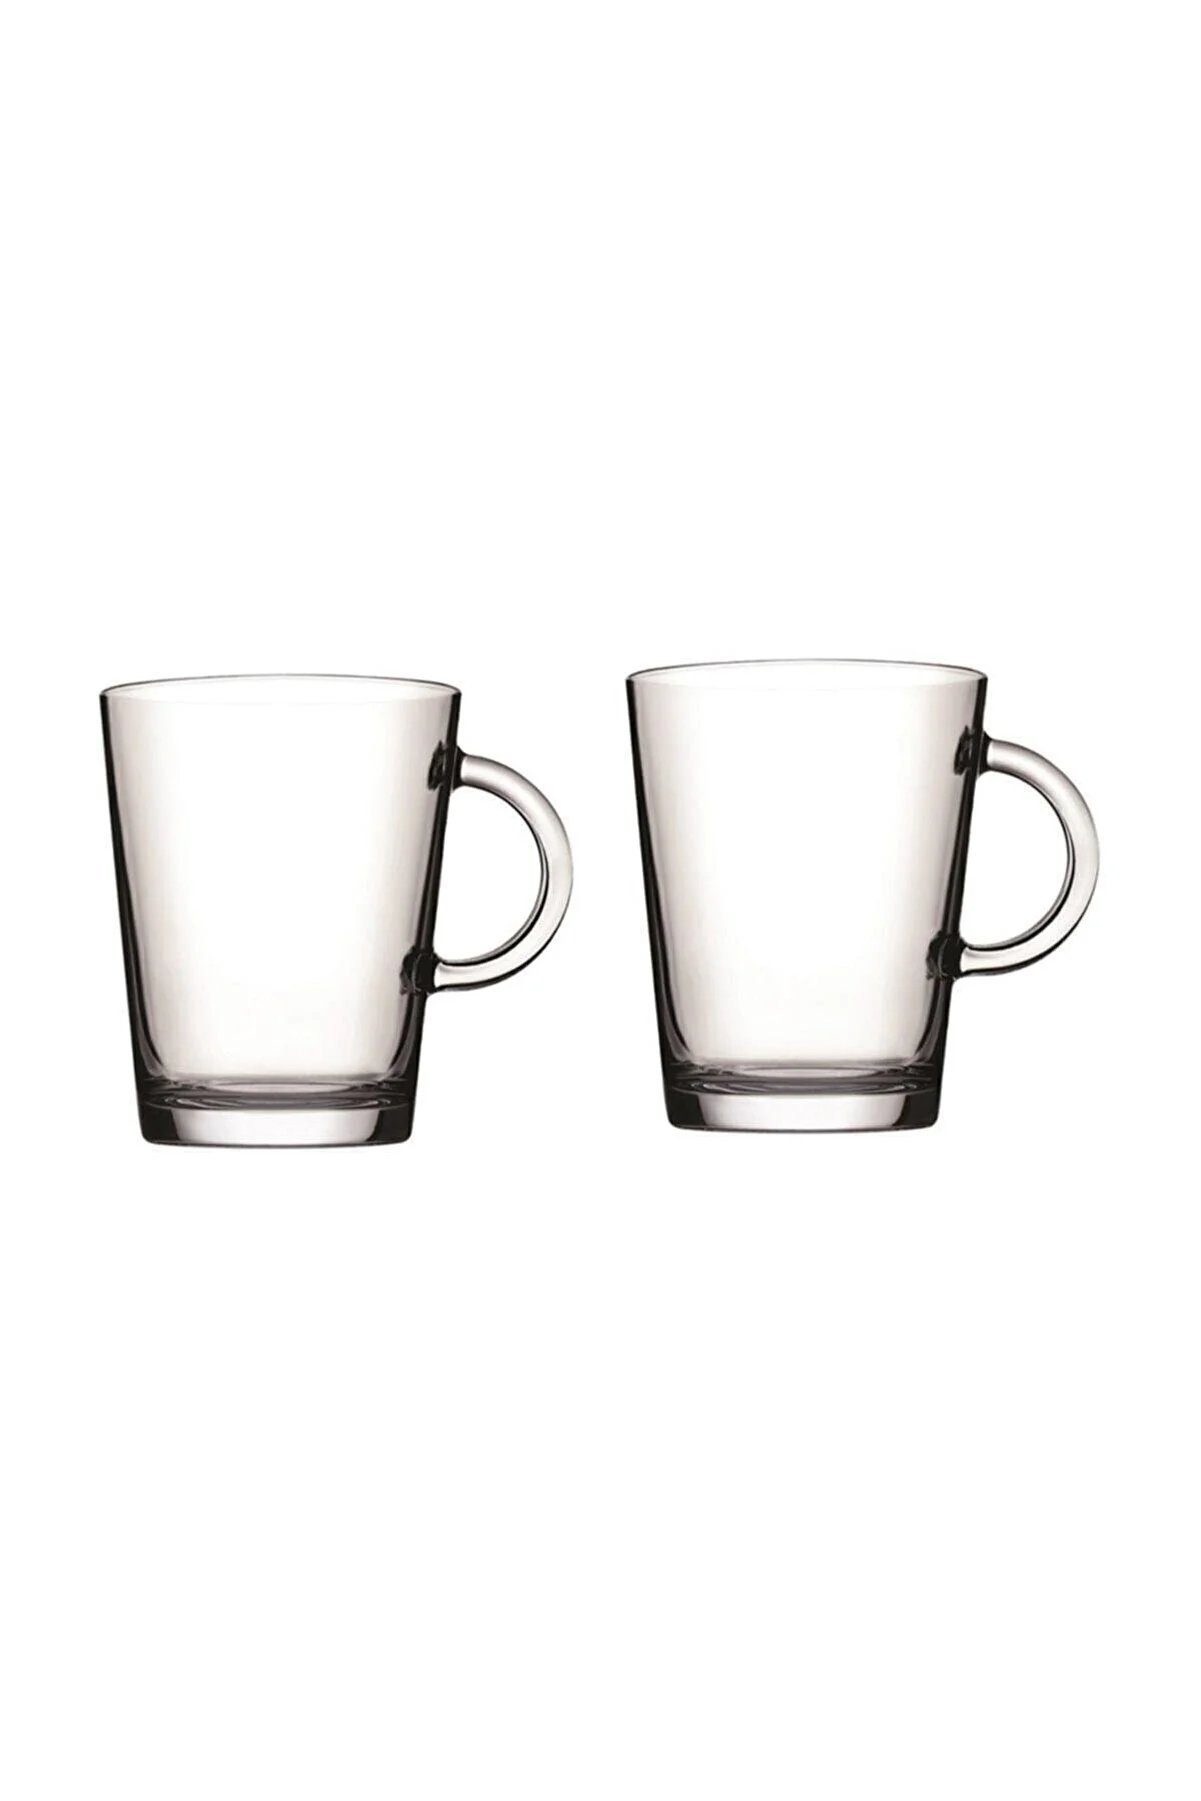 Pasabahce Glas 2er transparent Wasserglas set grift mit Glas, TRIBECA aus